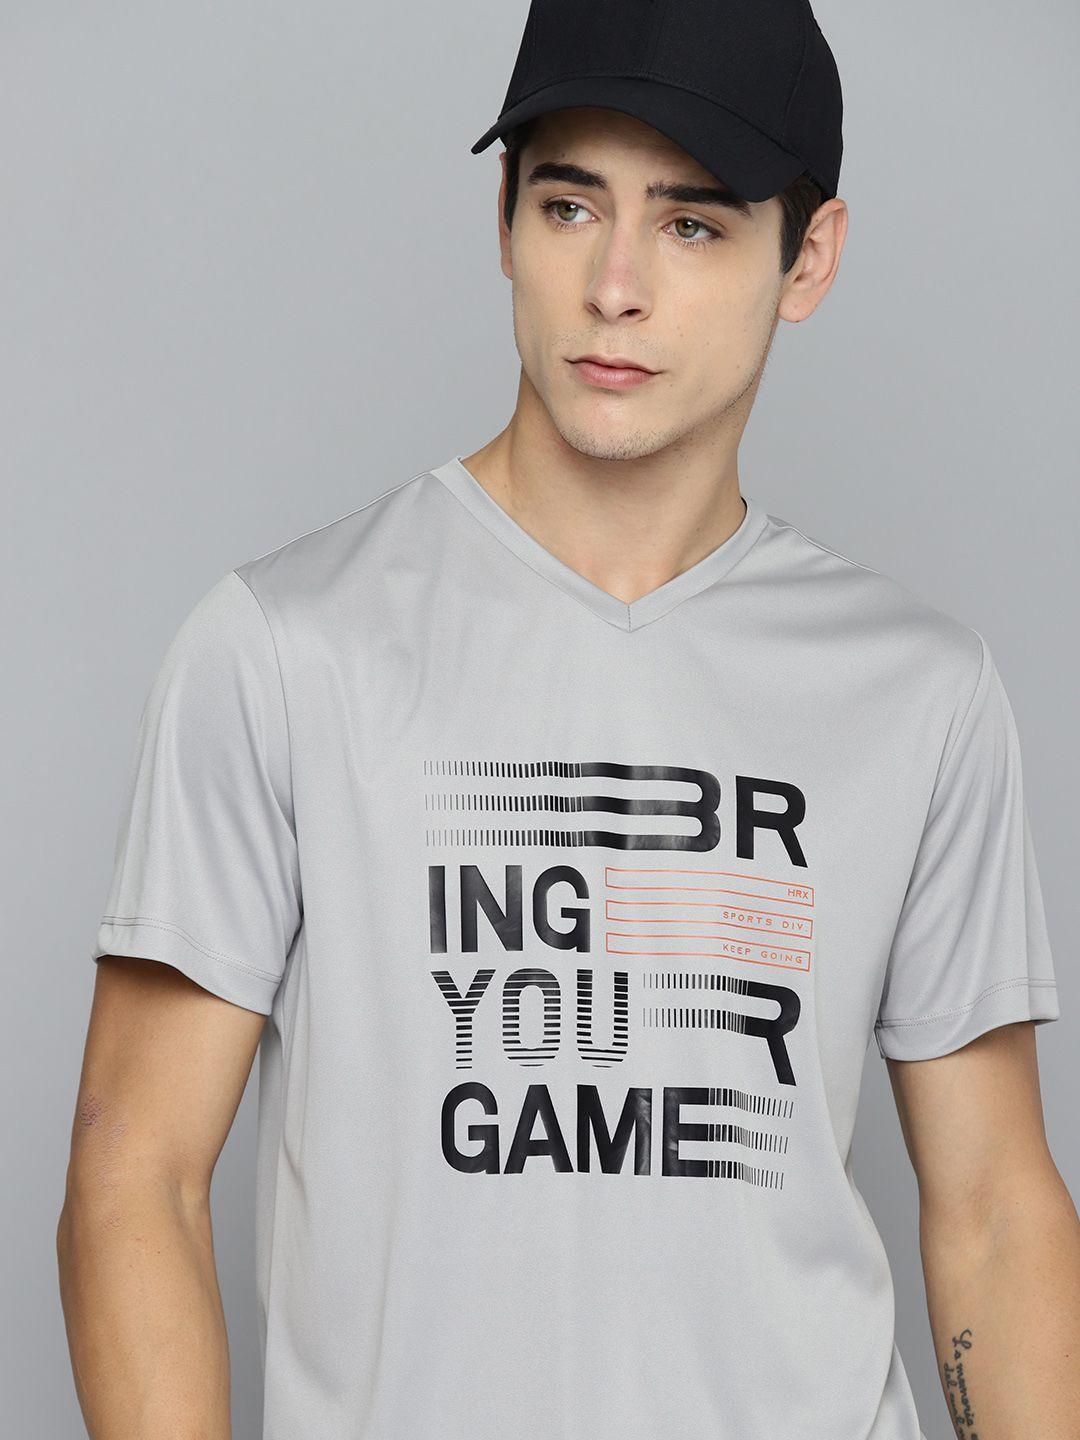 hrx by hrithik roshan printed rapid-dry racket sport t-shirt